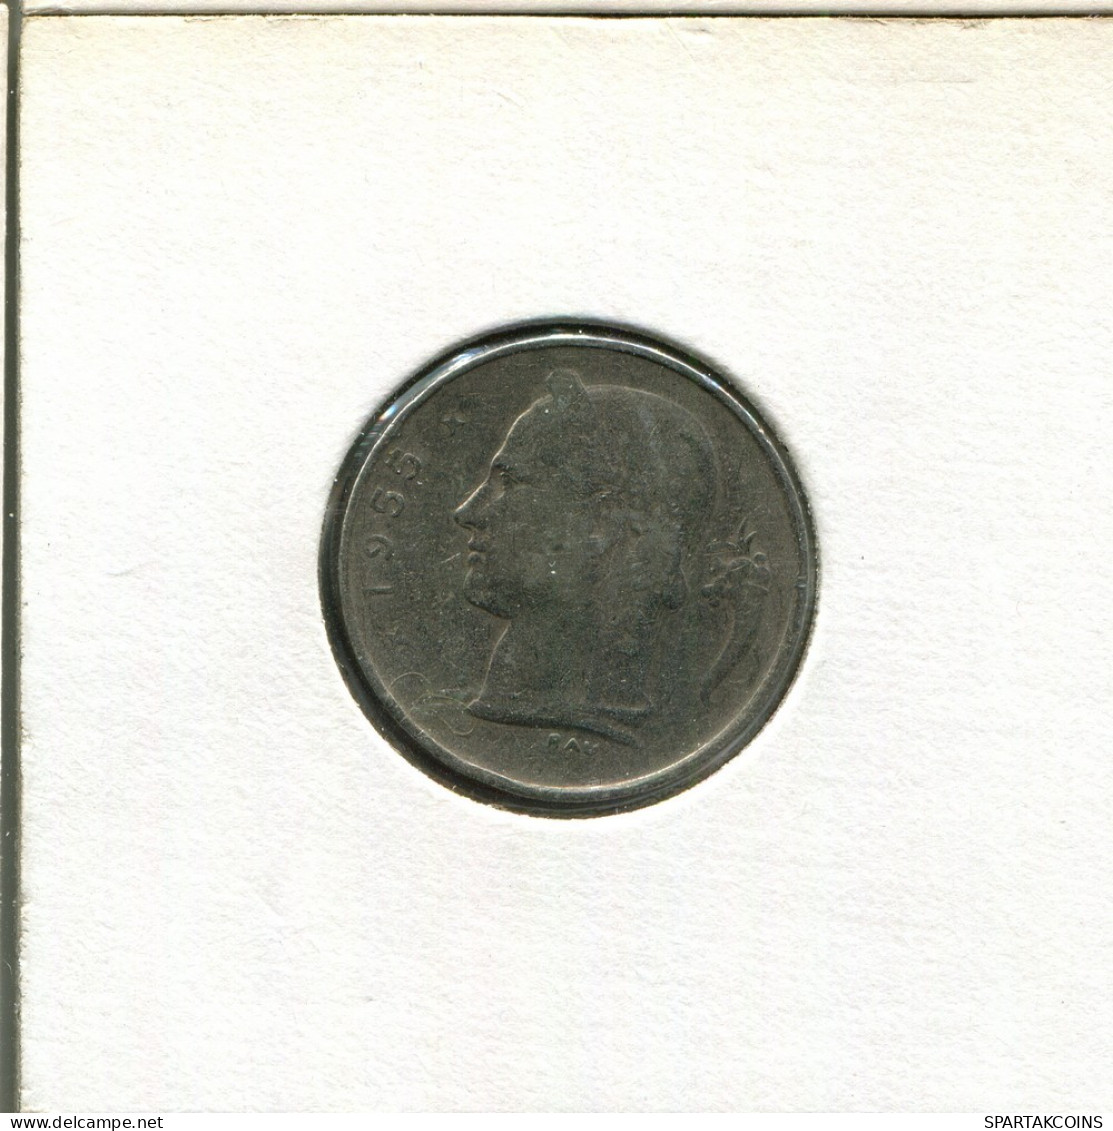 1 FRANC 1955 FRENCH Text BELGIUM Coin #AU022.U.A - 1 Franc